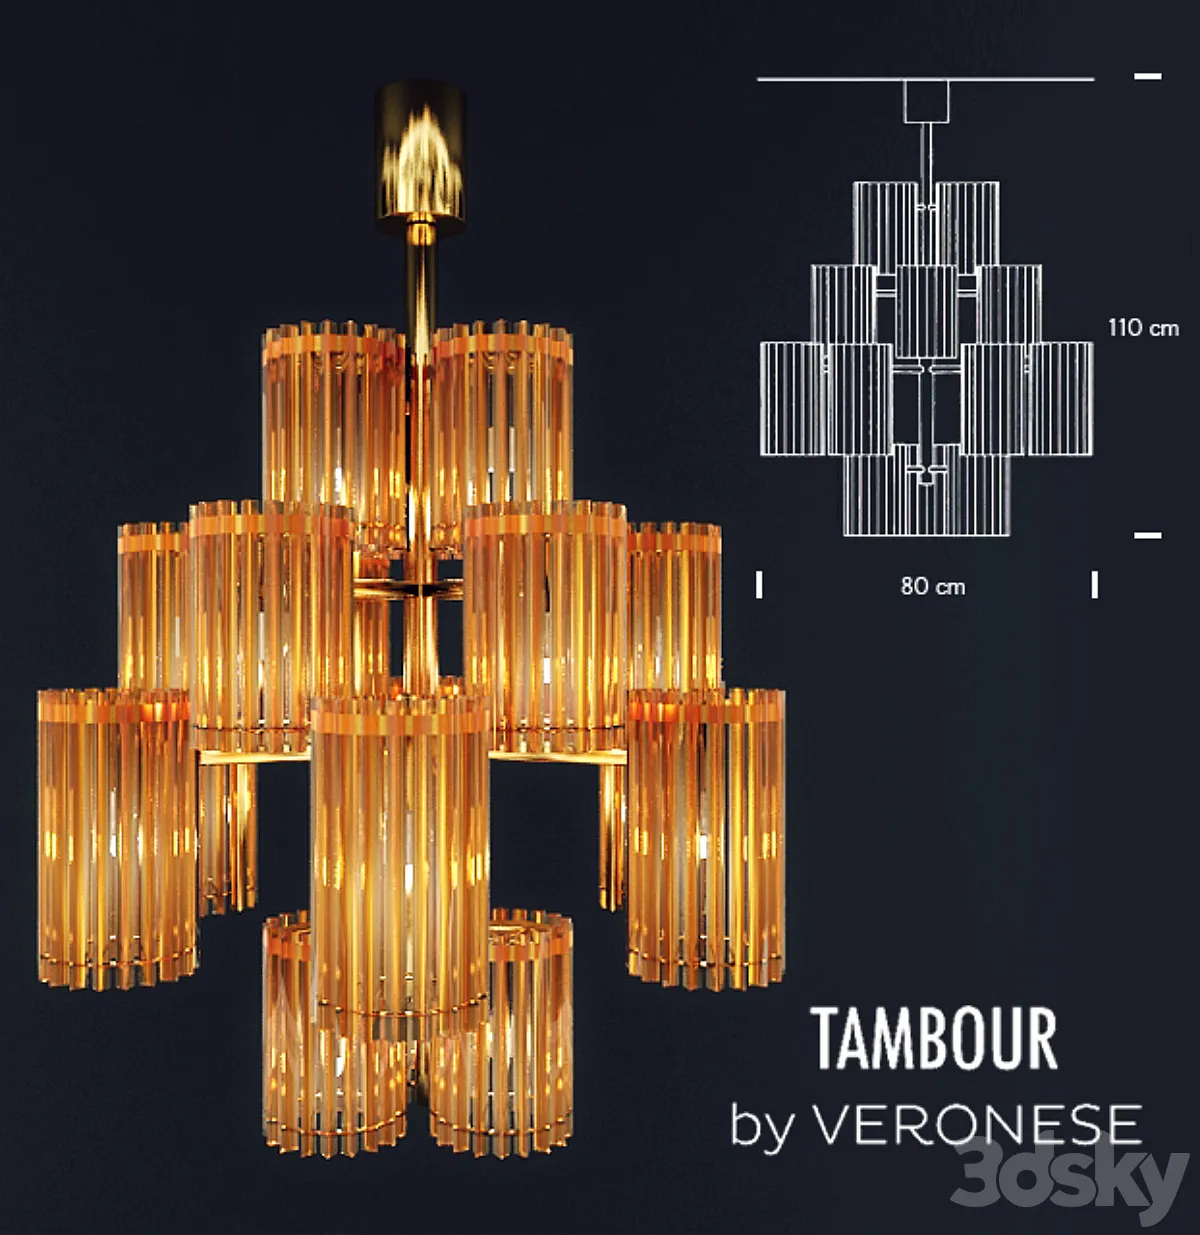 3dsky - Veronese - Tambour - Pendant light - 3D model